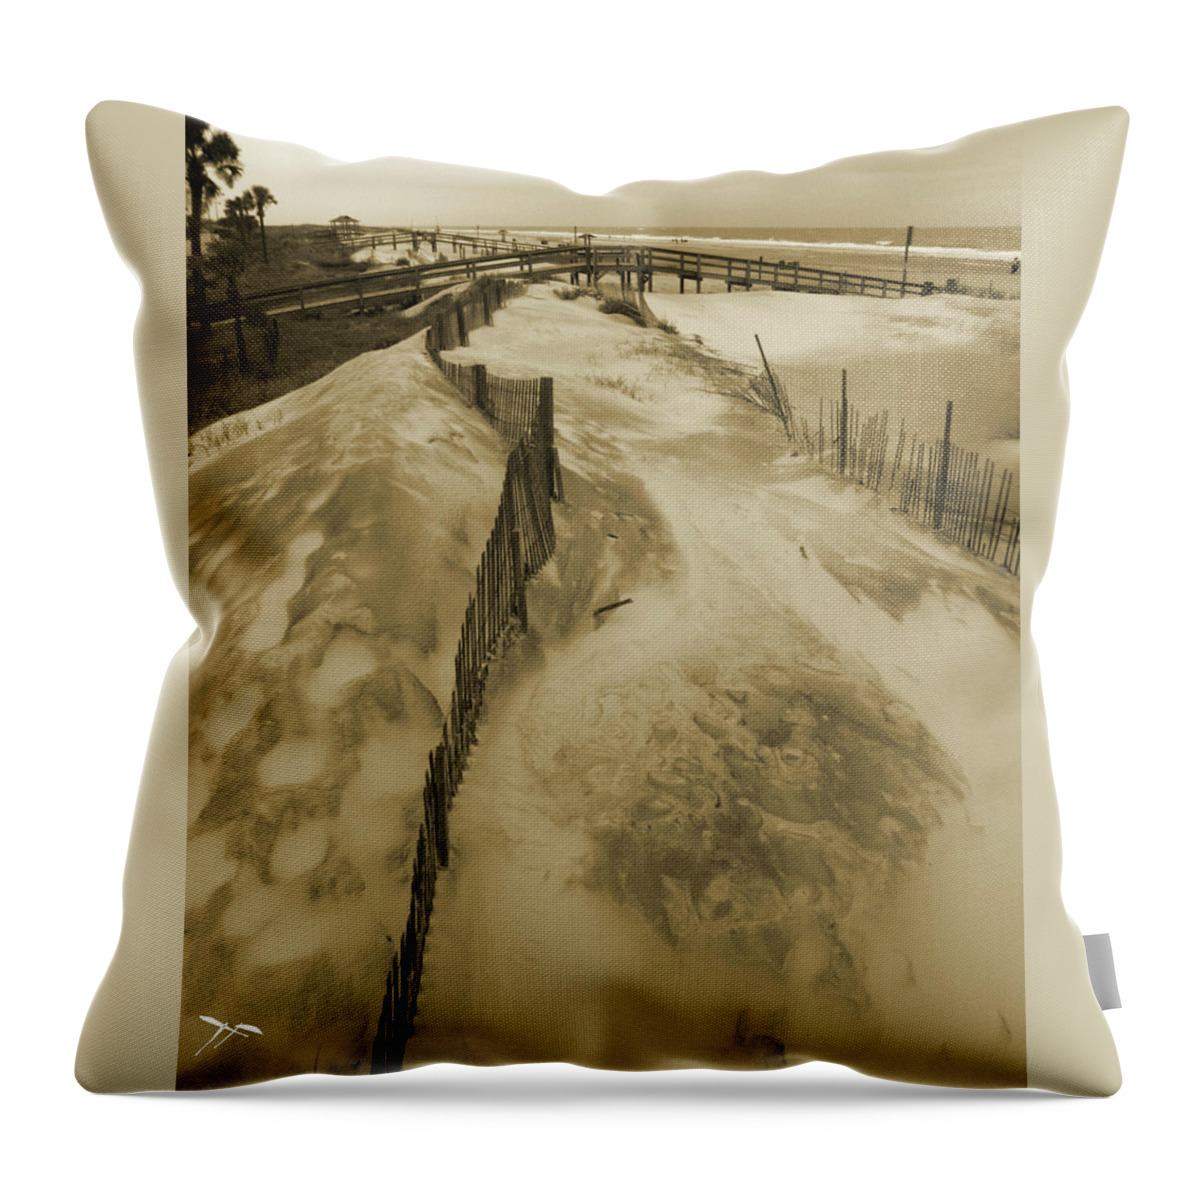 Tybee Island Throw Pillow featuring the photograph Tybee Island Beach by Theresa Fairchild